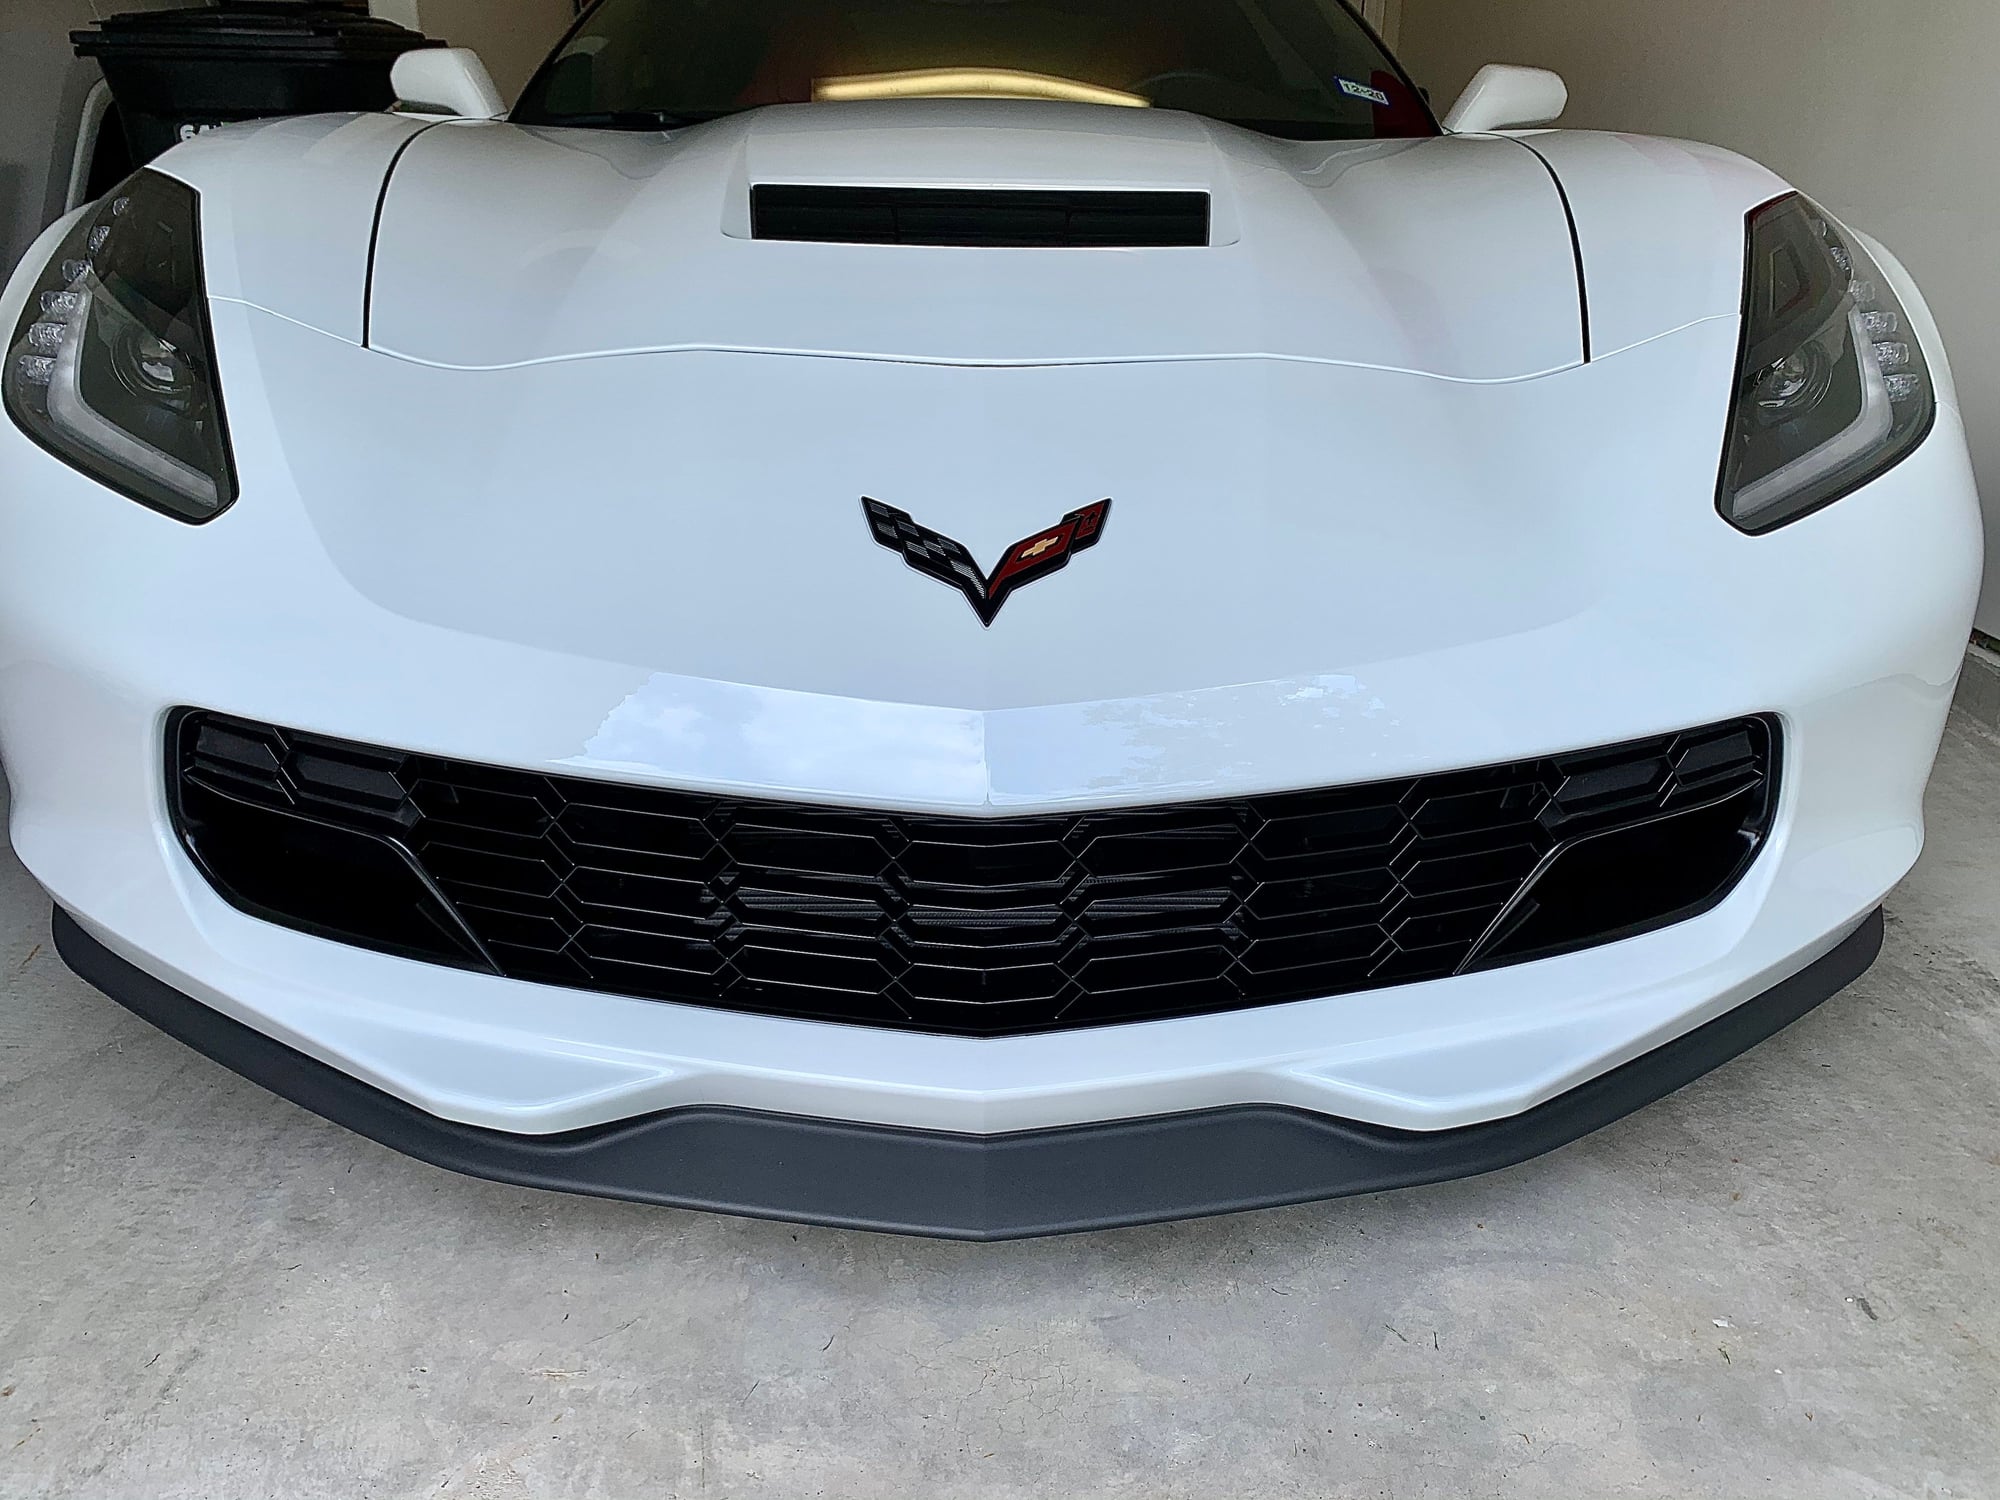 Bra or no bra? - CorvetteForum - Chevrolet Corvette Forum Discussion